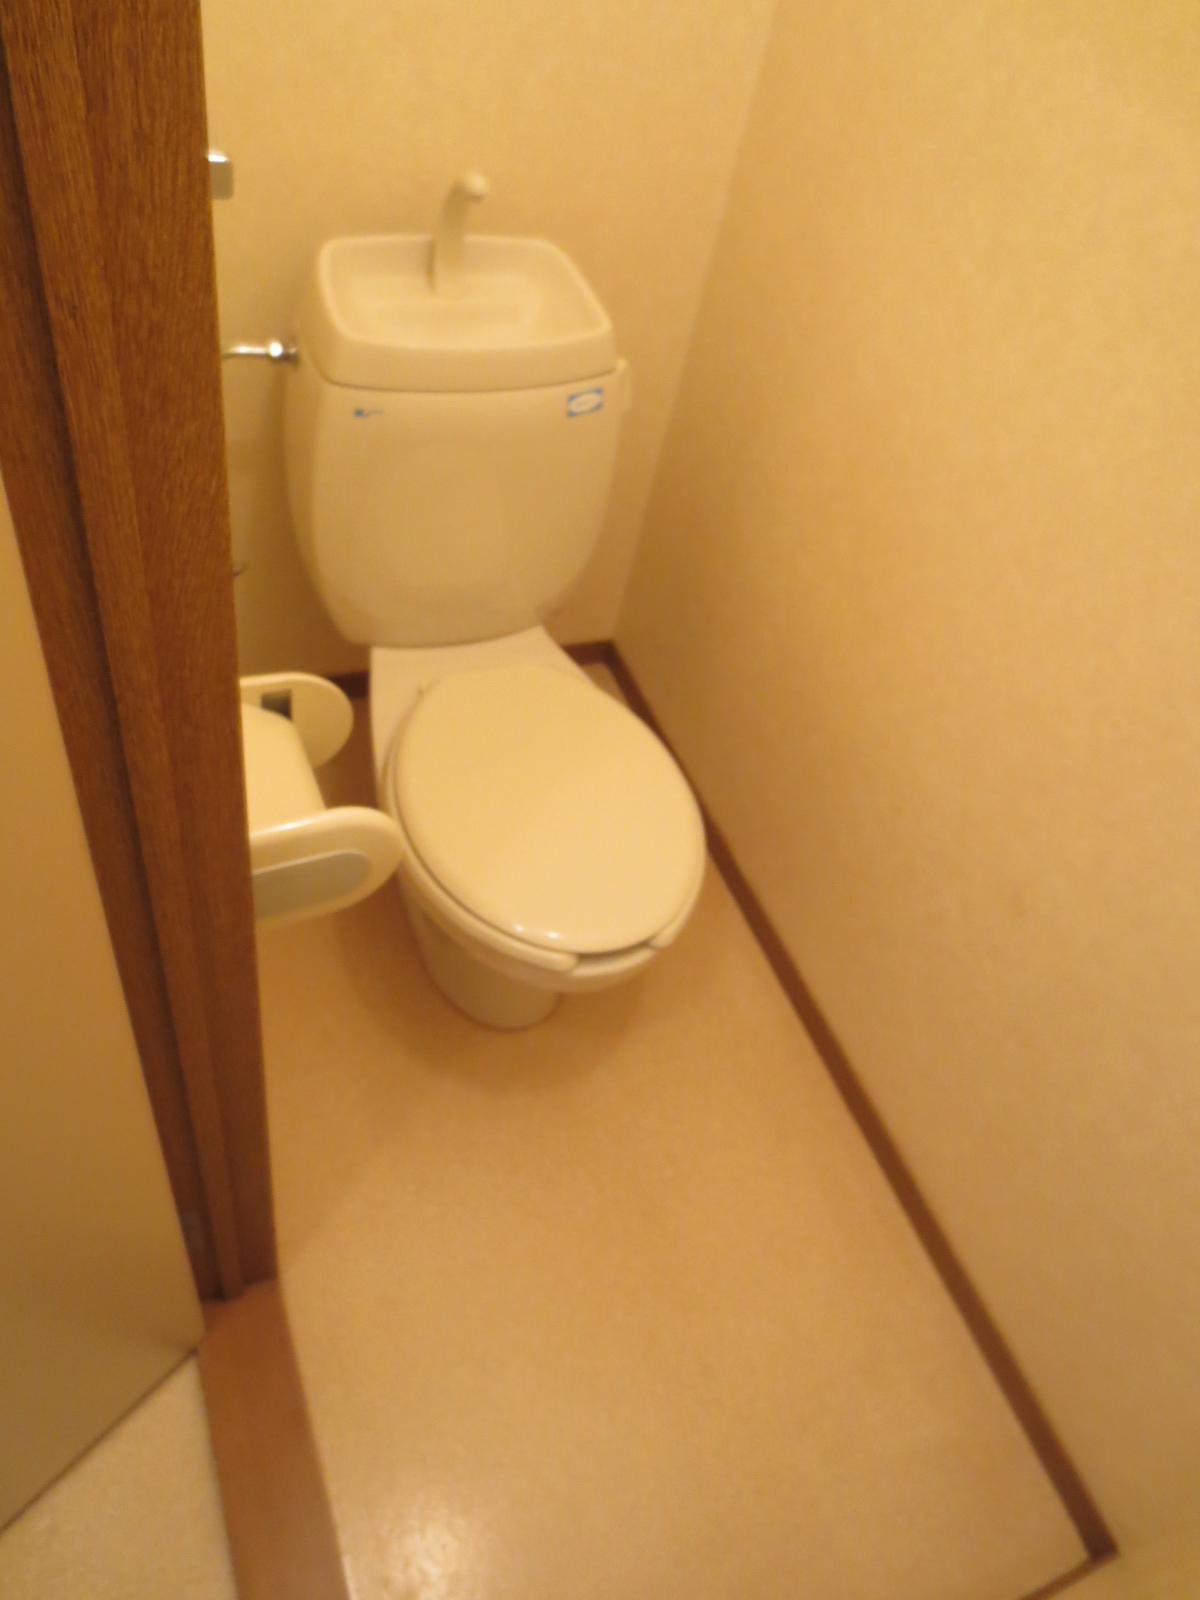 Toilet. It is a simple toilet!